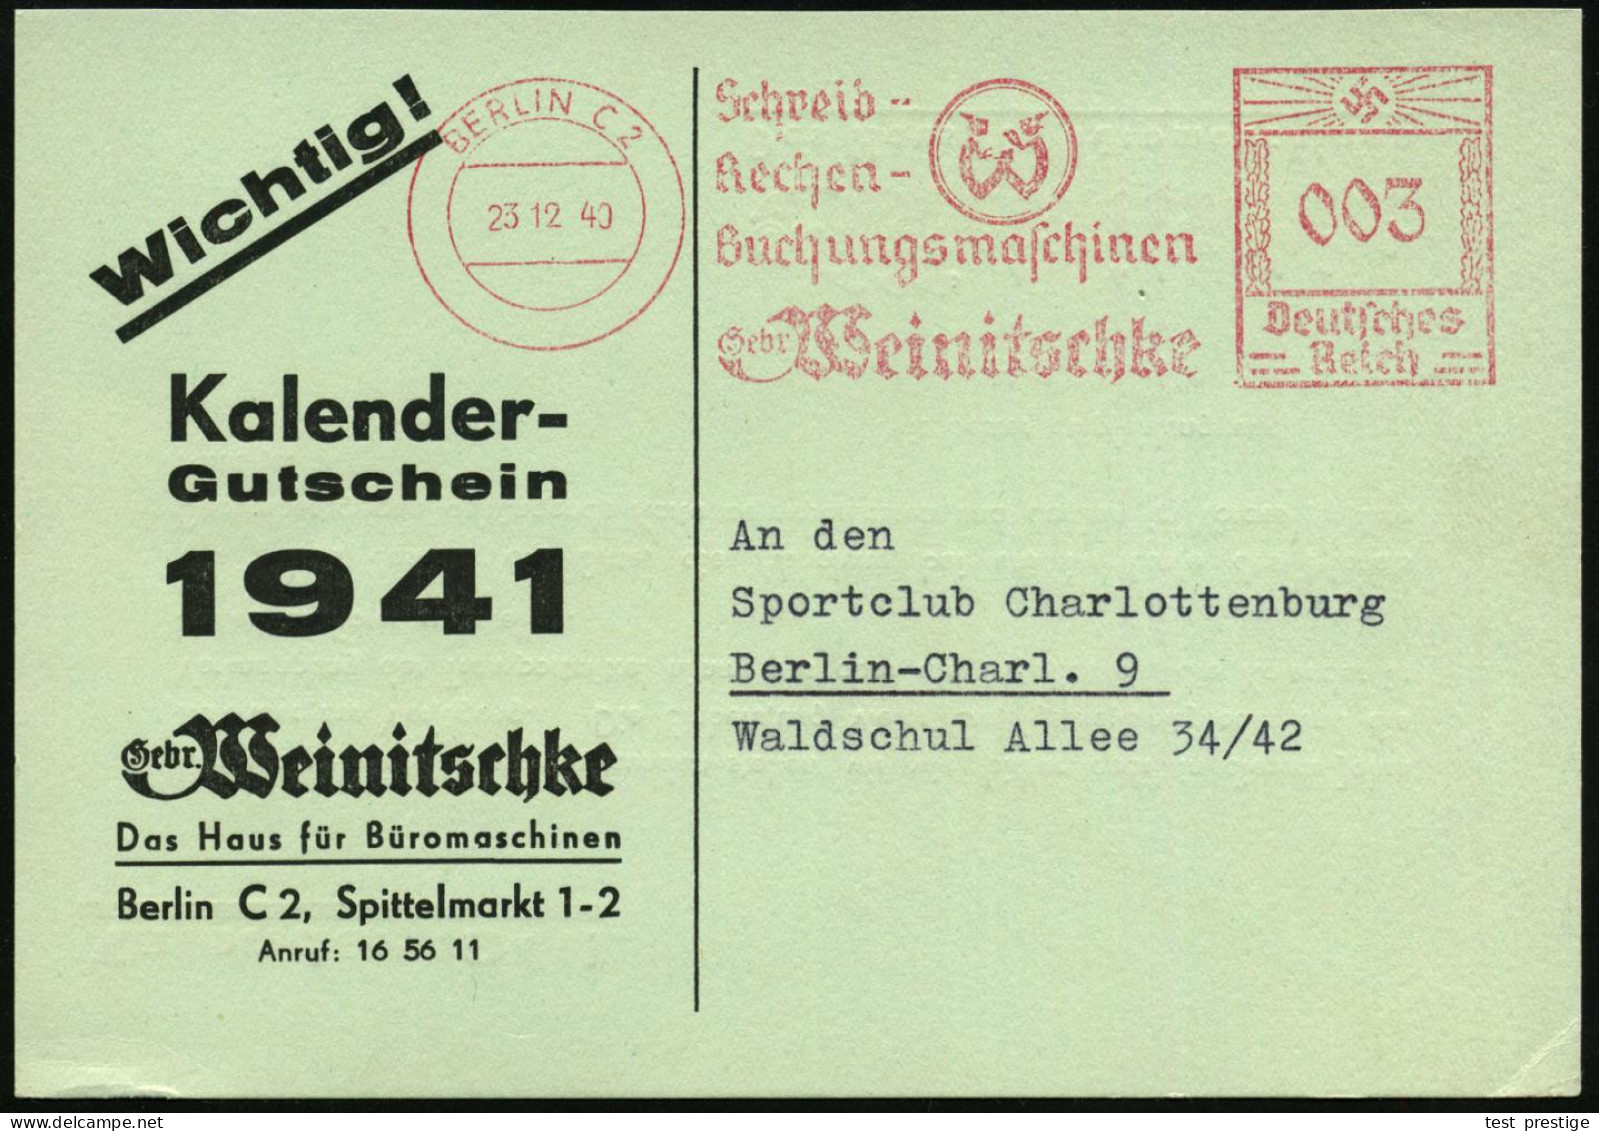 BERLIN C2/ Schreib-/ Rechen-/ Buchungsmaschinen/ Gebr.Weinitschke 1940 (23.12.) AFS Francotyp (Logo) Auf Reklame-Kt. Bet - Computers